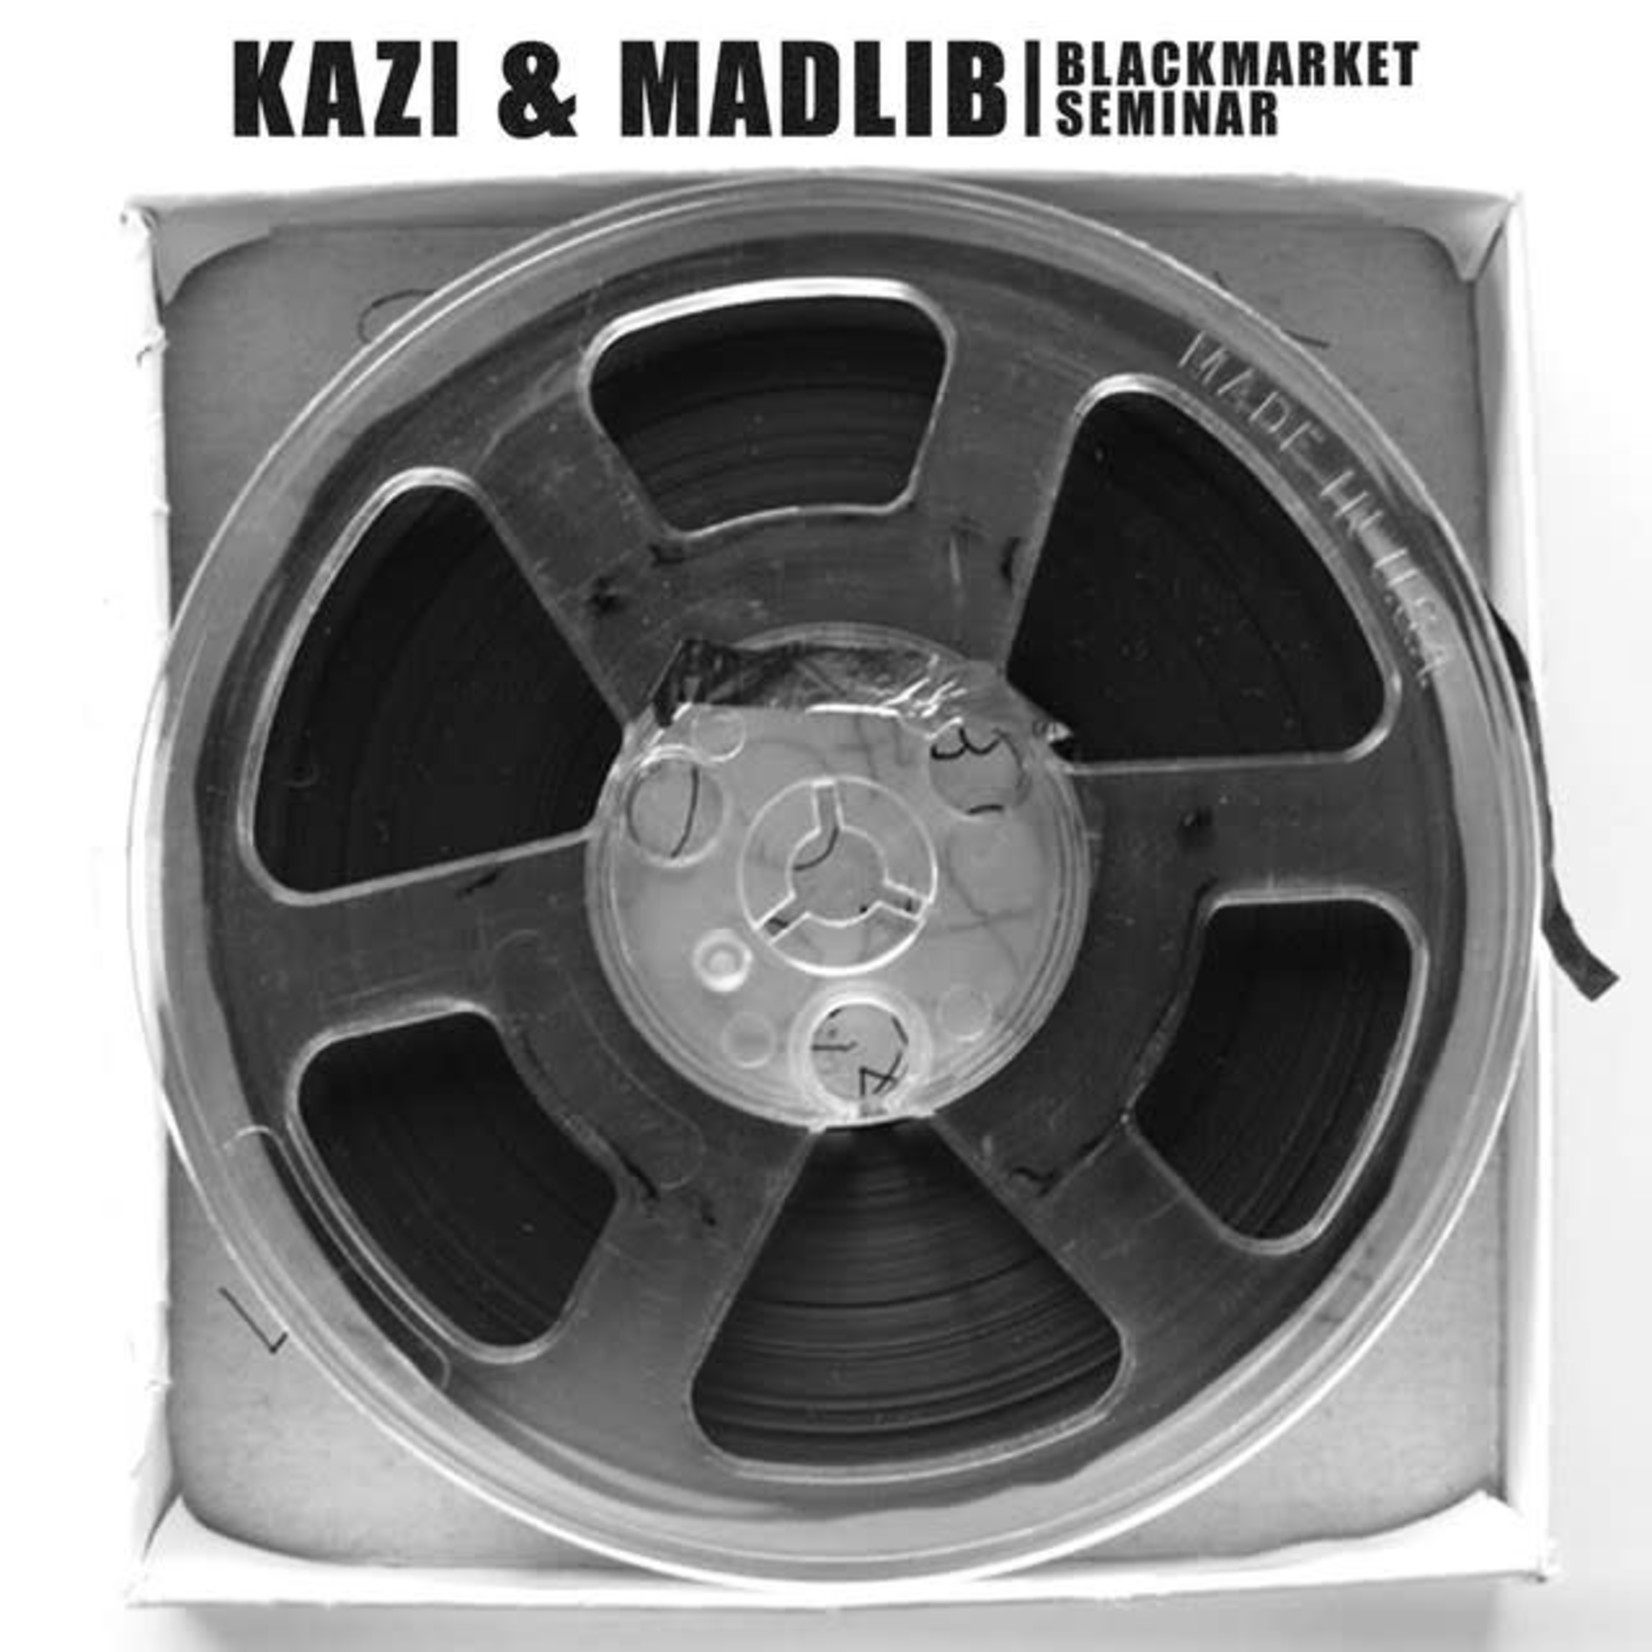 [New] Kazi & Madlib - Blackmarket Seminar (2LP)